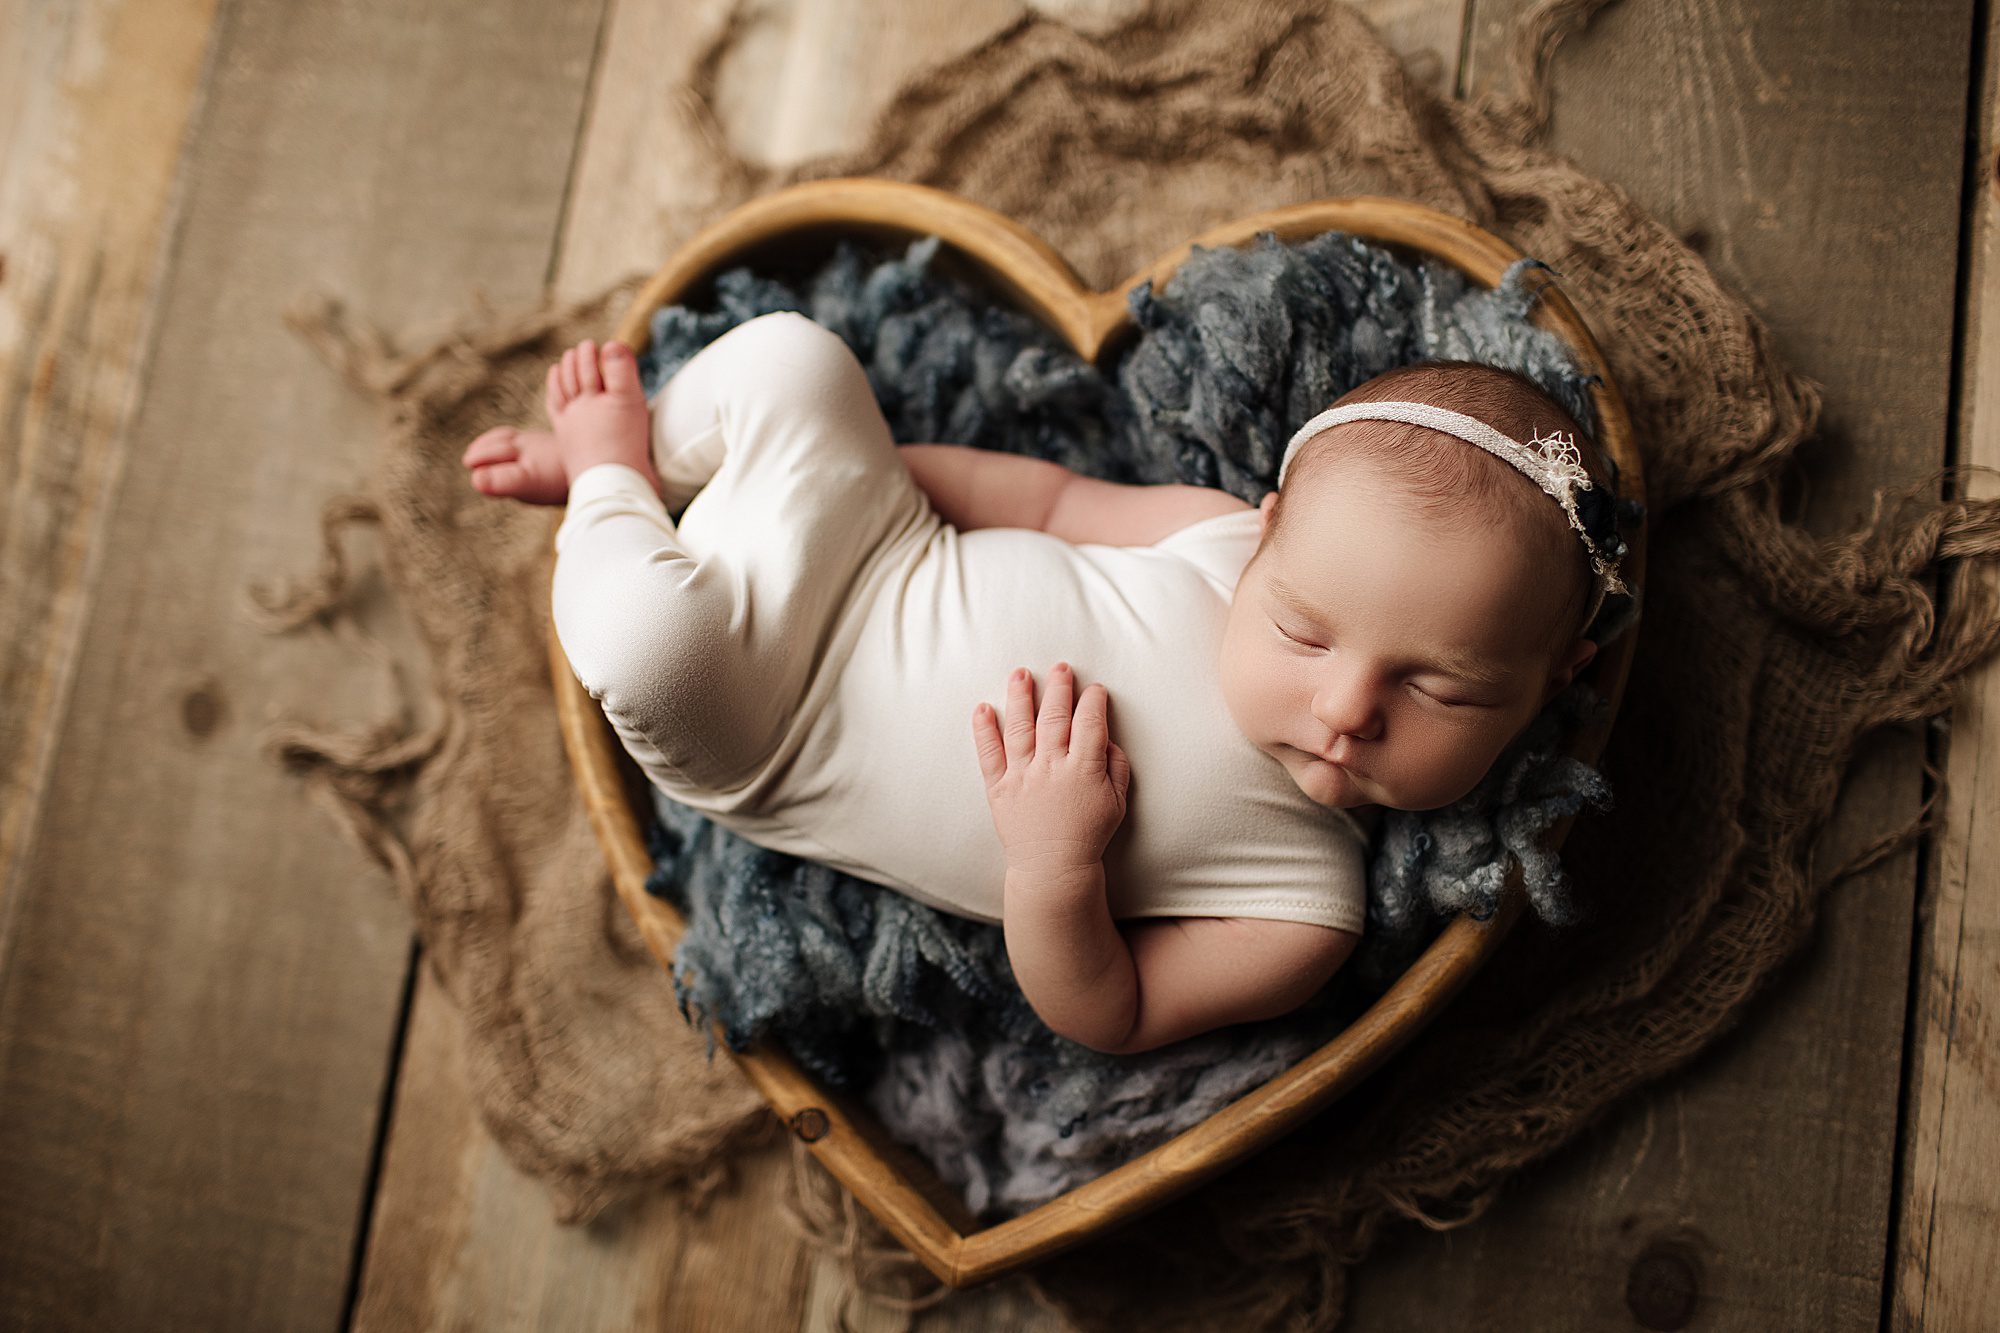 edmonton newborn photographers, newborn photography edmonton, tucked in pose, newborn boy poses, leduc newborn photographer